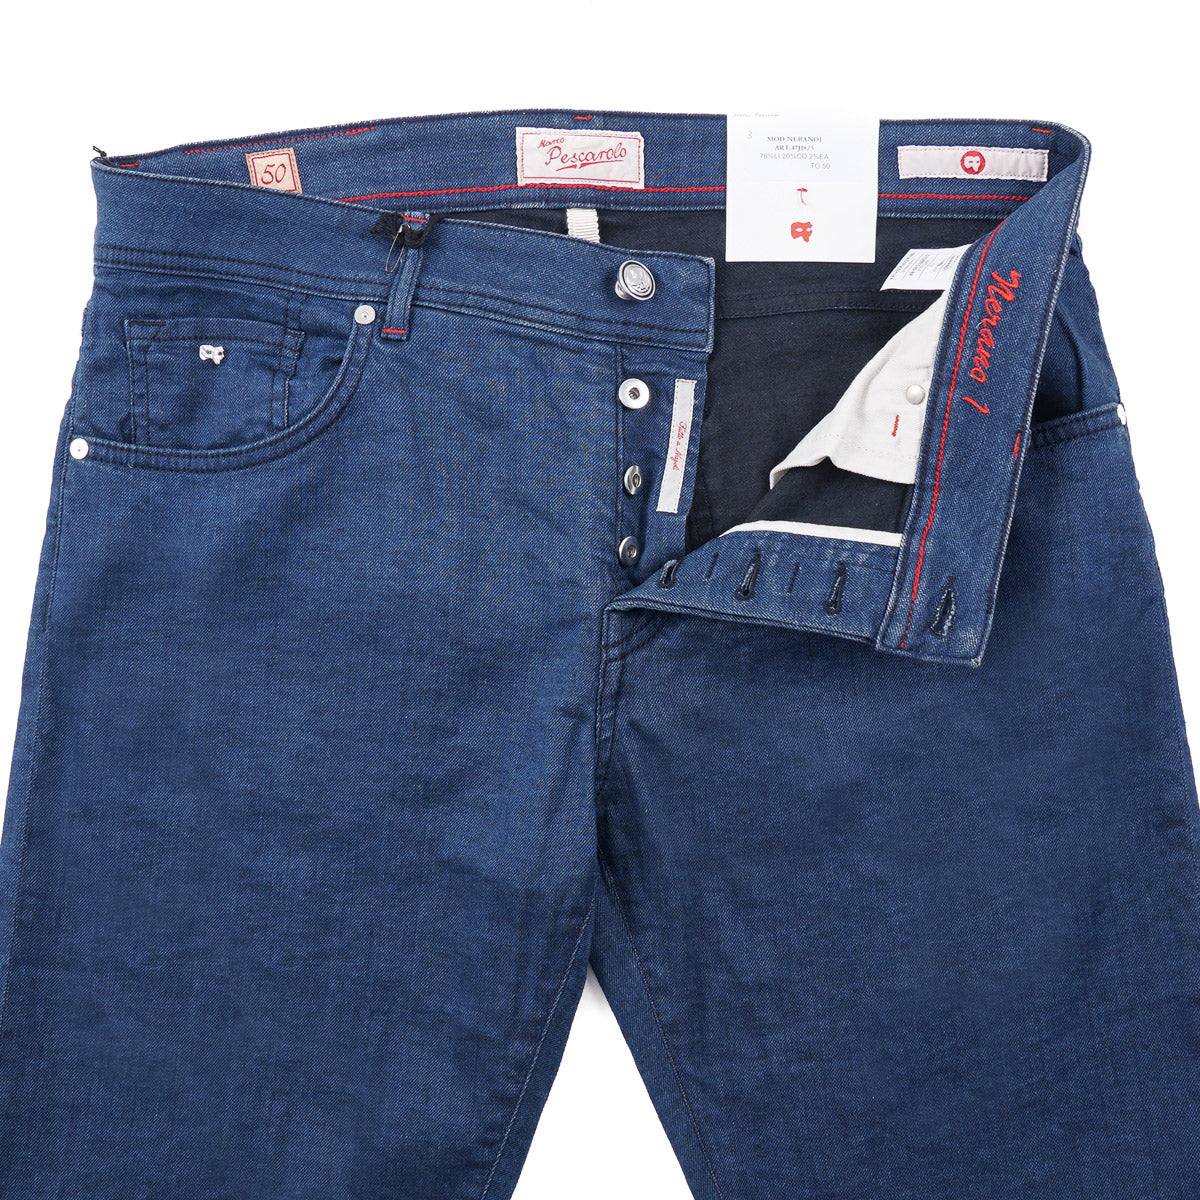 Marco Pescarolo Linen and Cotton Jeans - Top Shelf Apparel